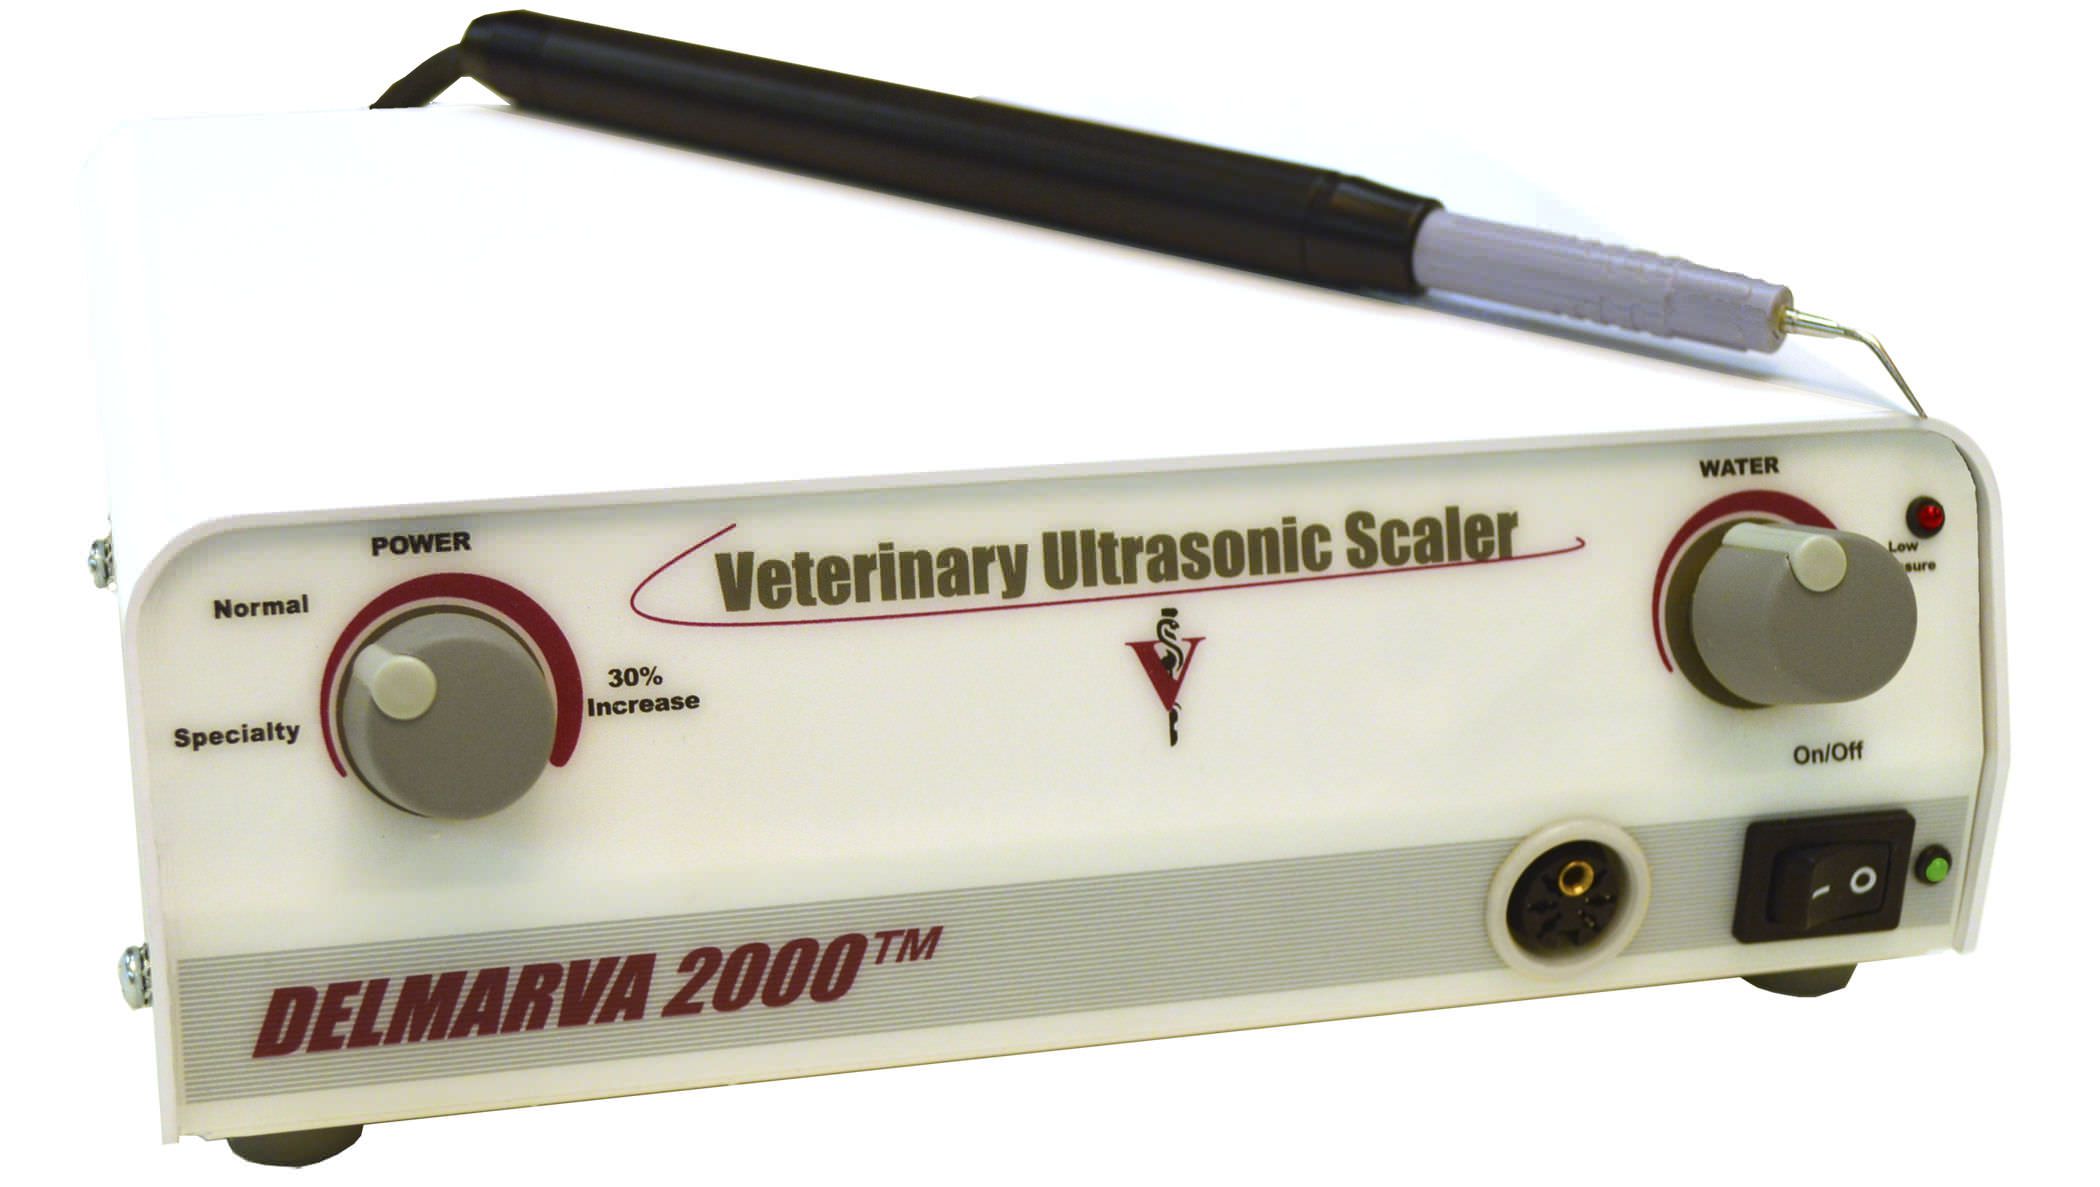 Ultrasonic dental scaler / complete set / veterinary Delmarva 2000™ Delmarva 2000